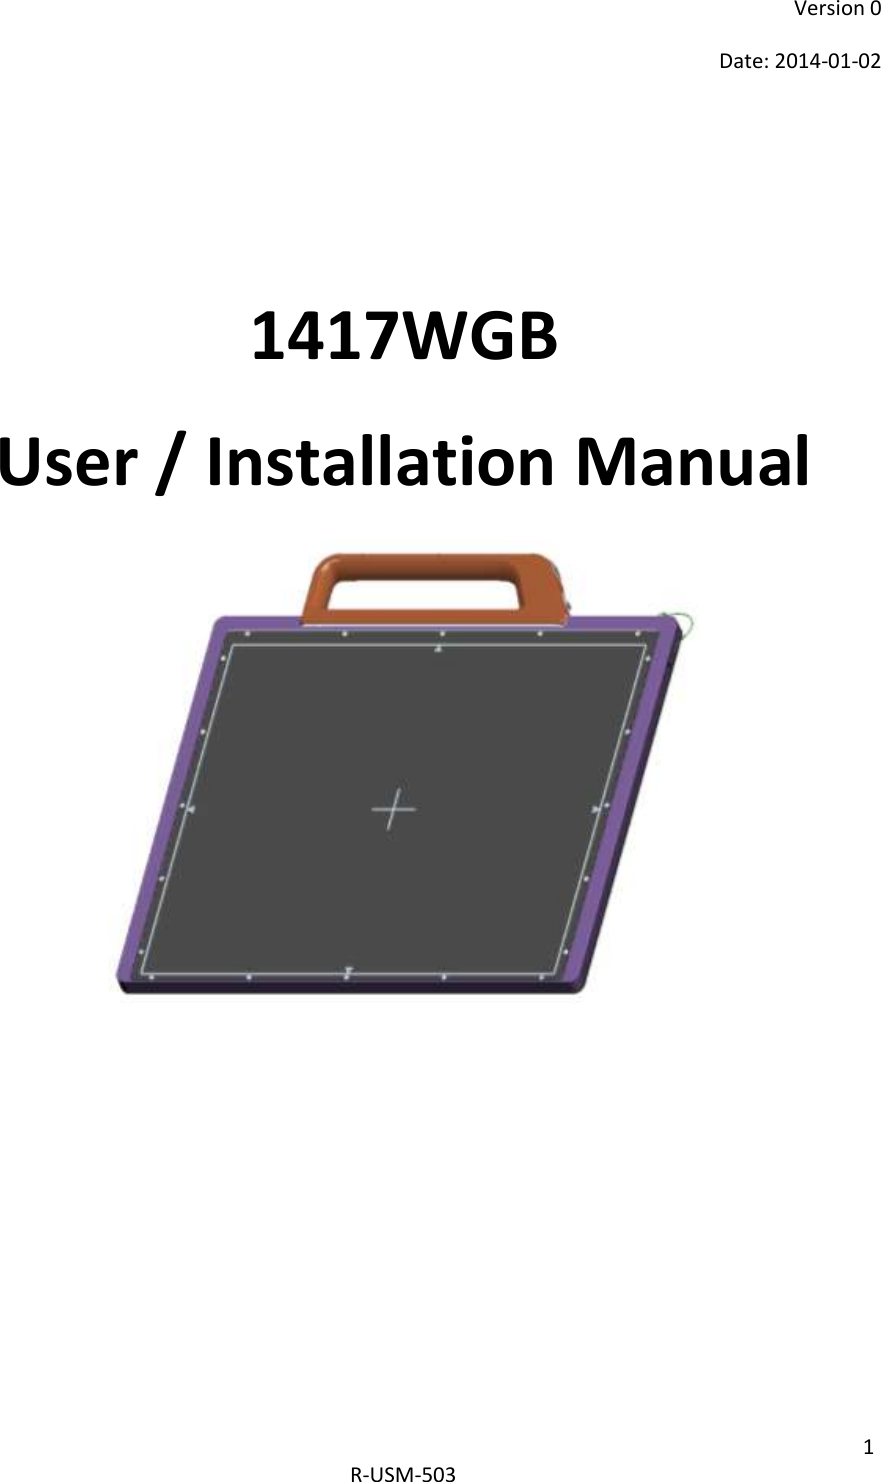 1  R-USM-503         1417WGB User / Installation Manual       Version 0 Date: 2014-01-02 